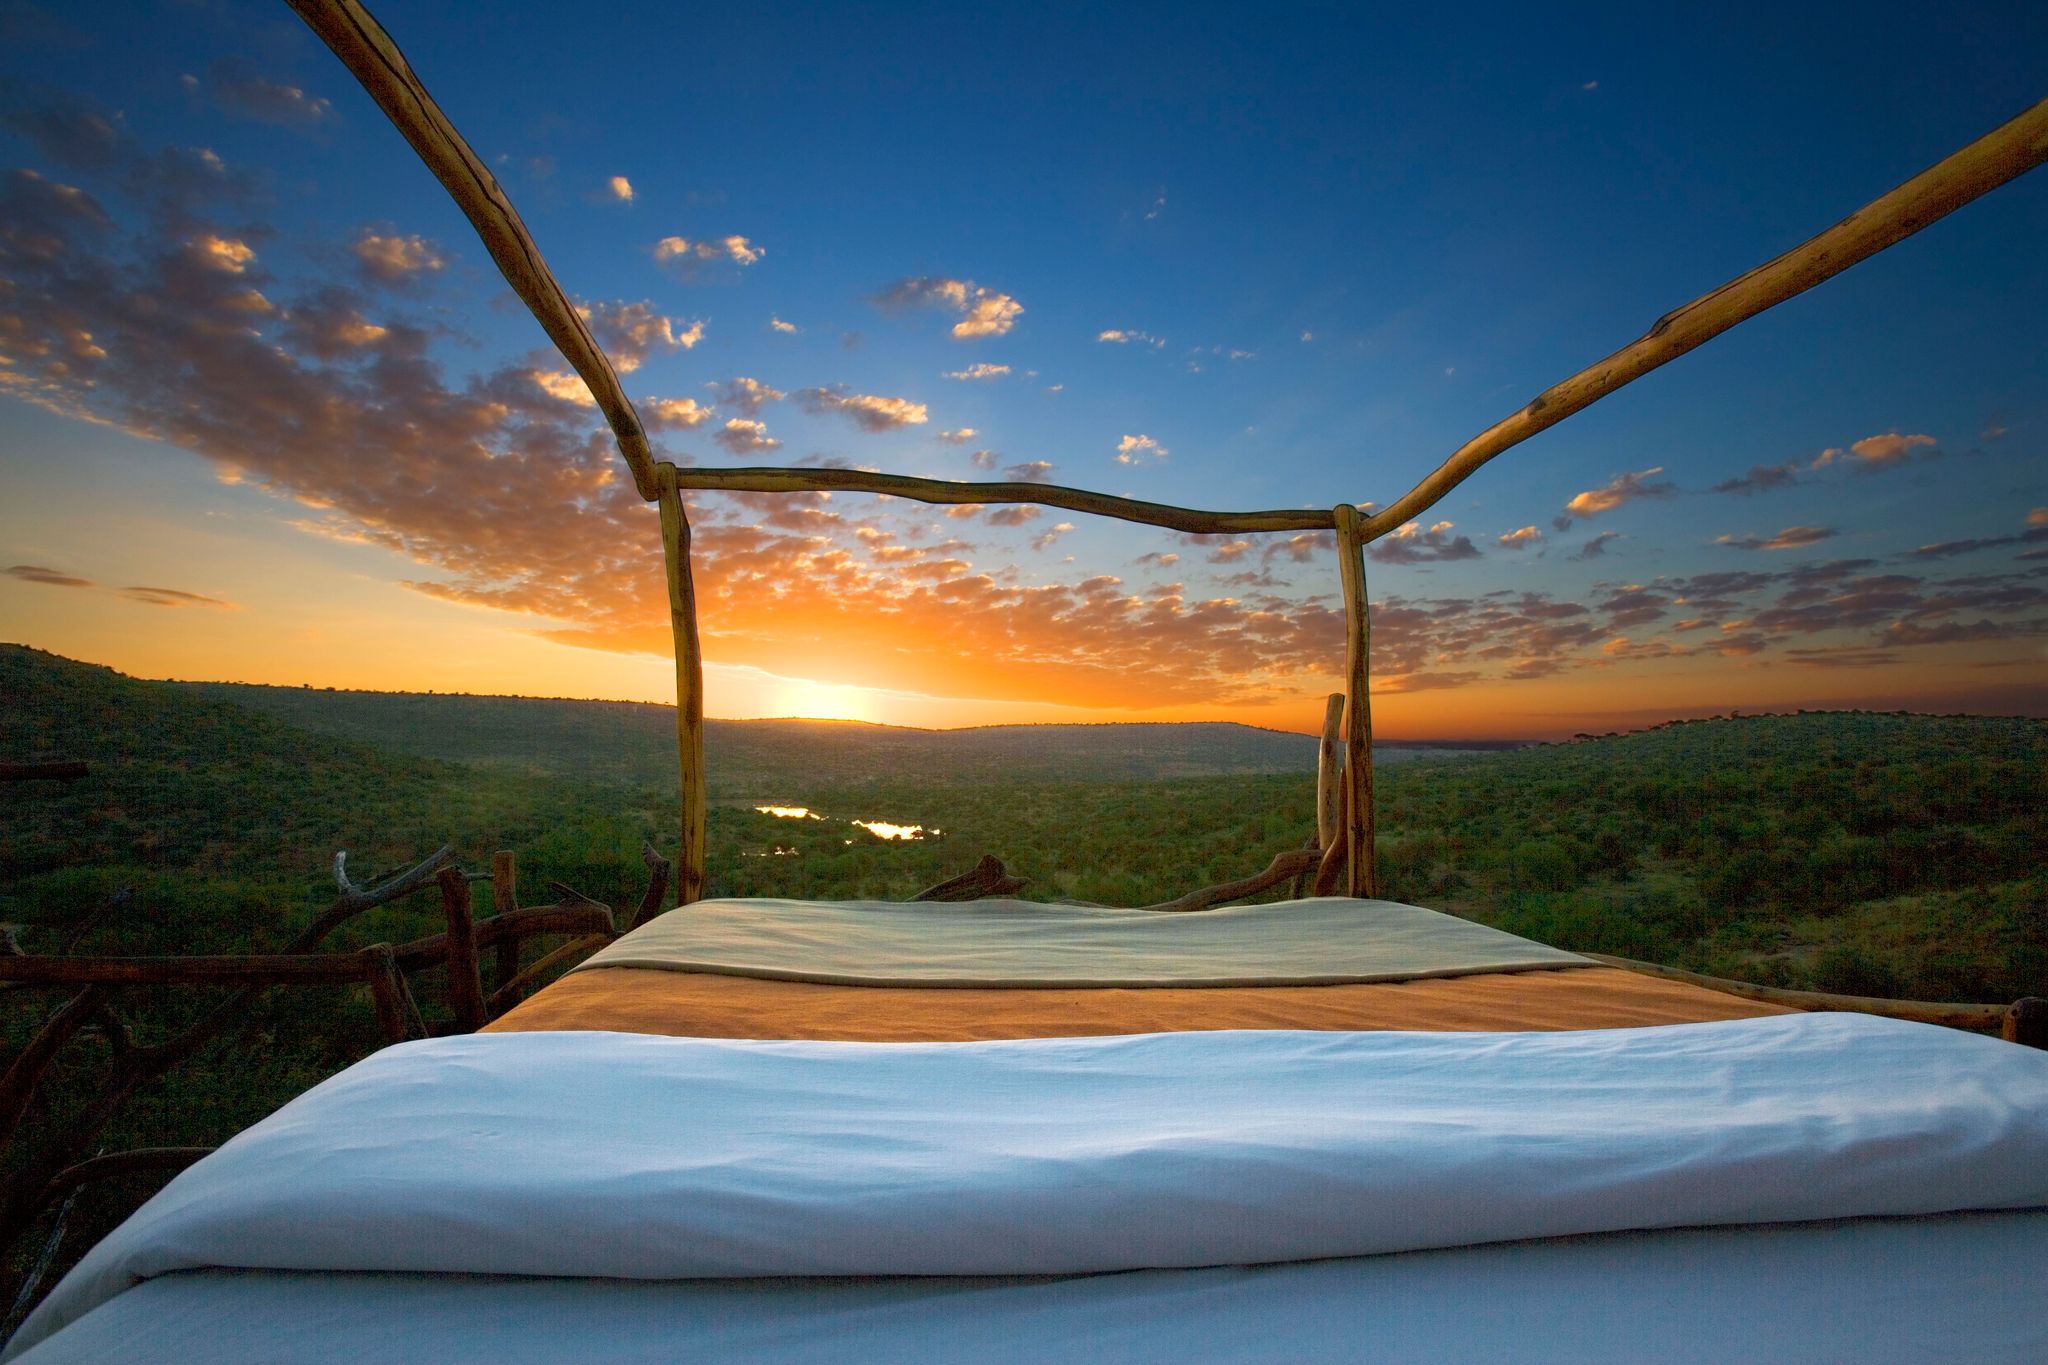 Sleep under the stars in one of Kenya's leading wildlife destinations